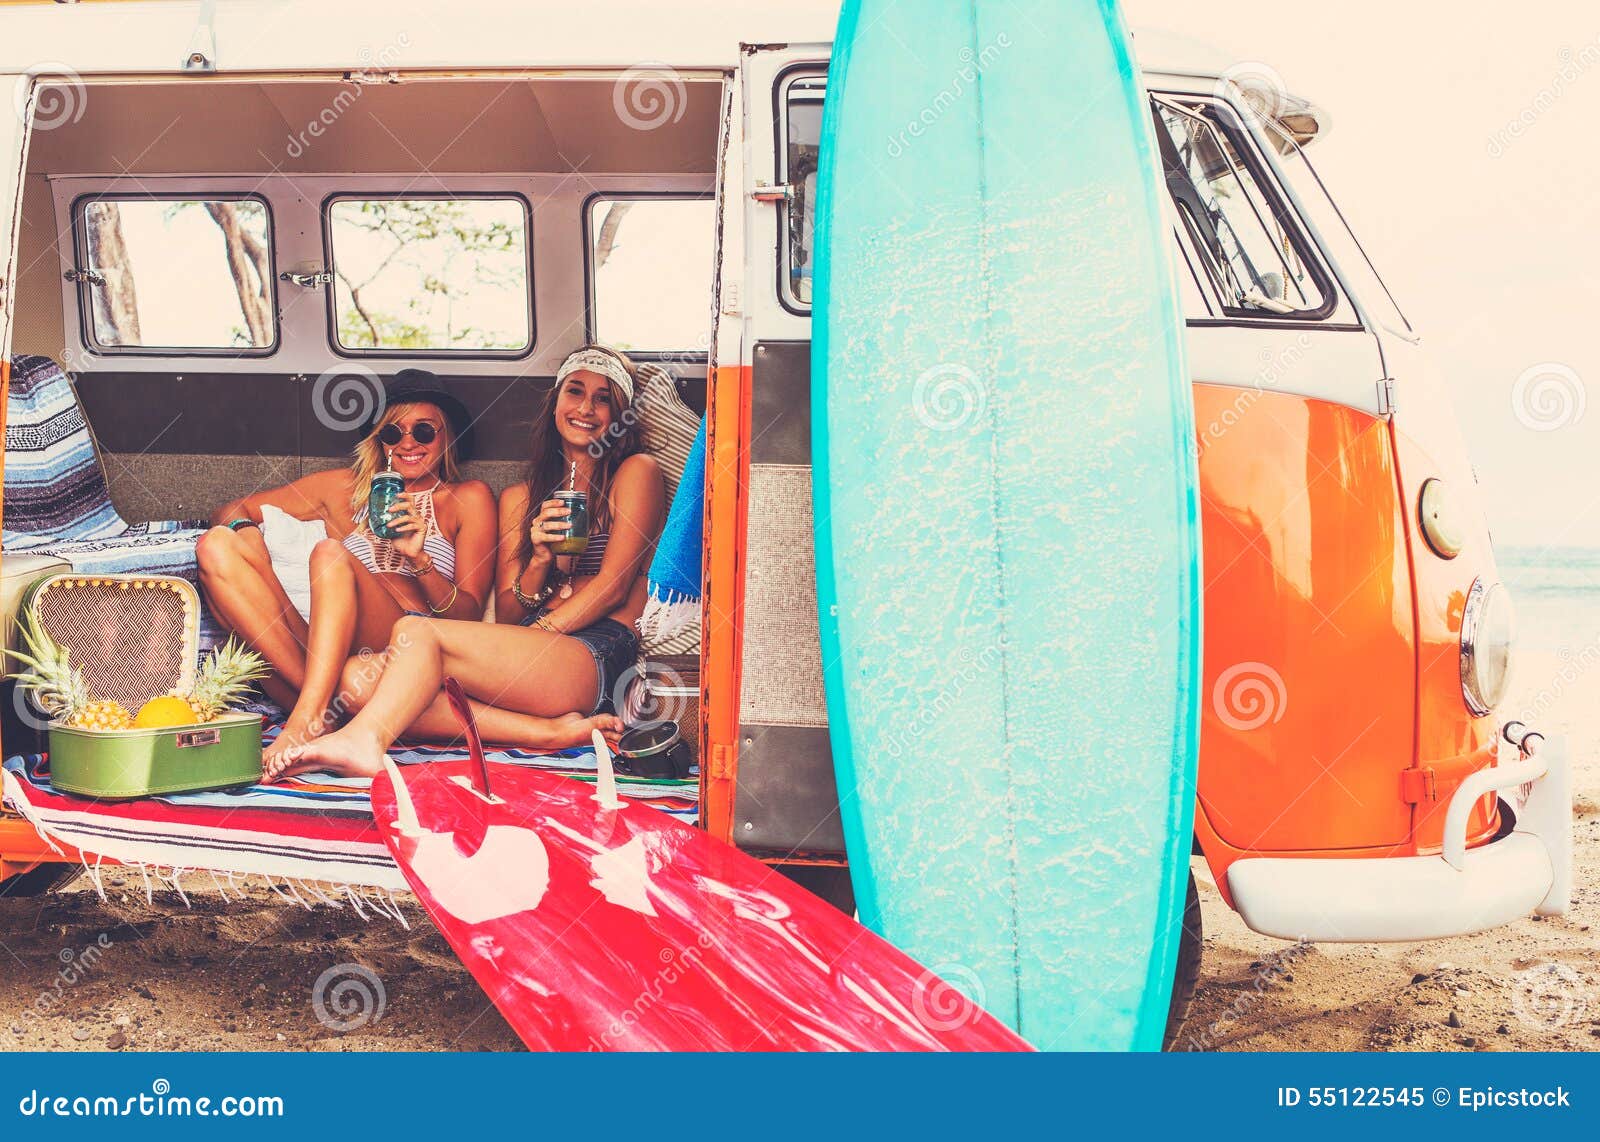 beach lifestyle surfer girls in vintage surf van